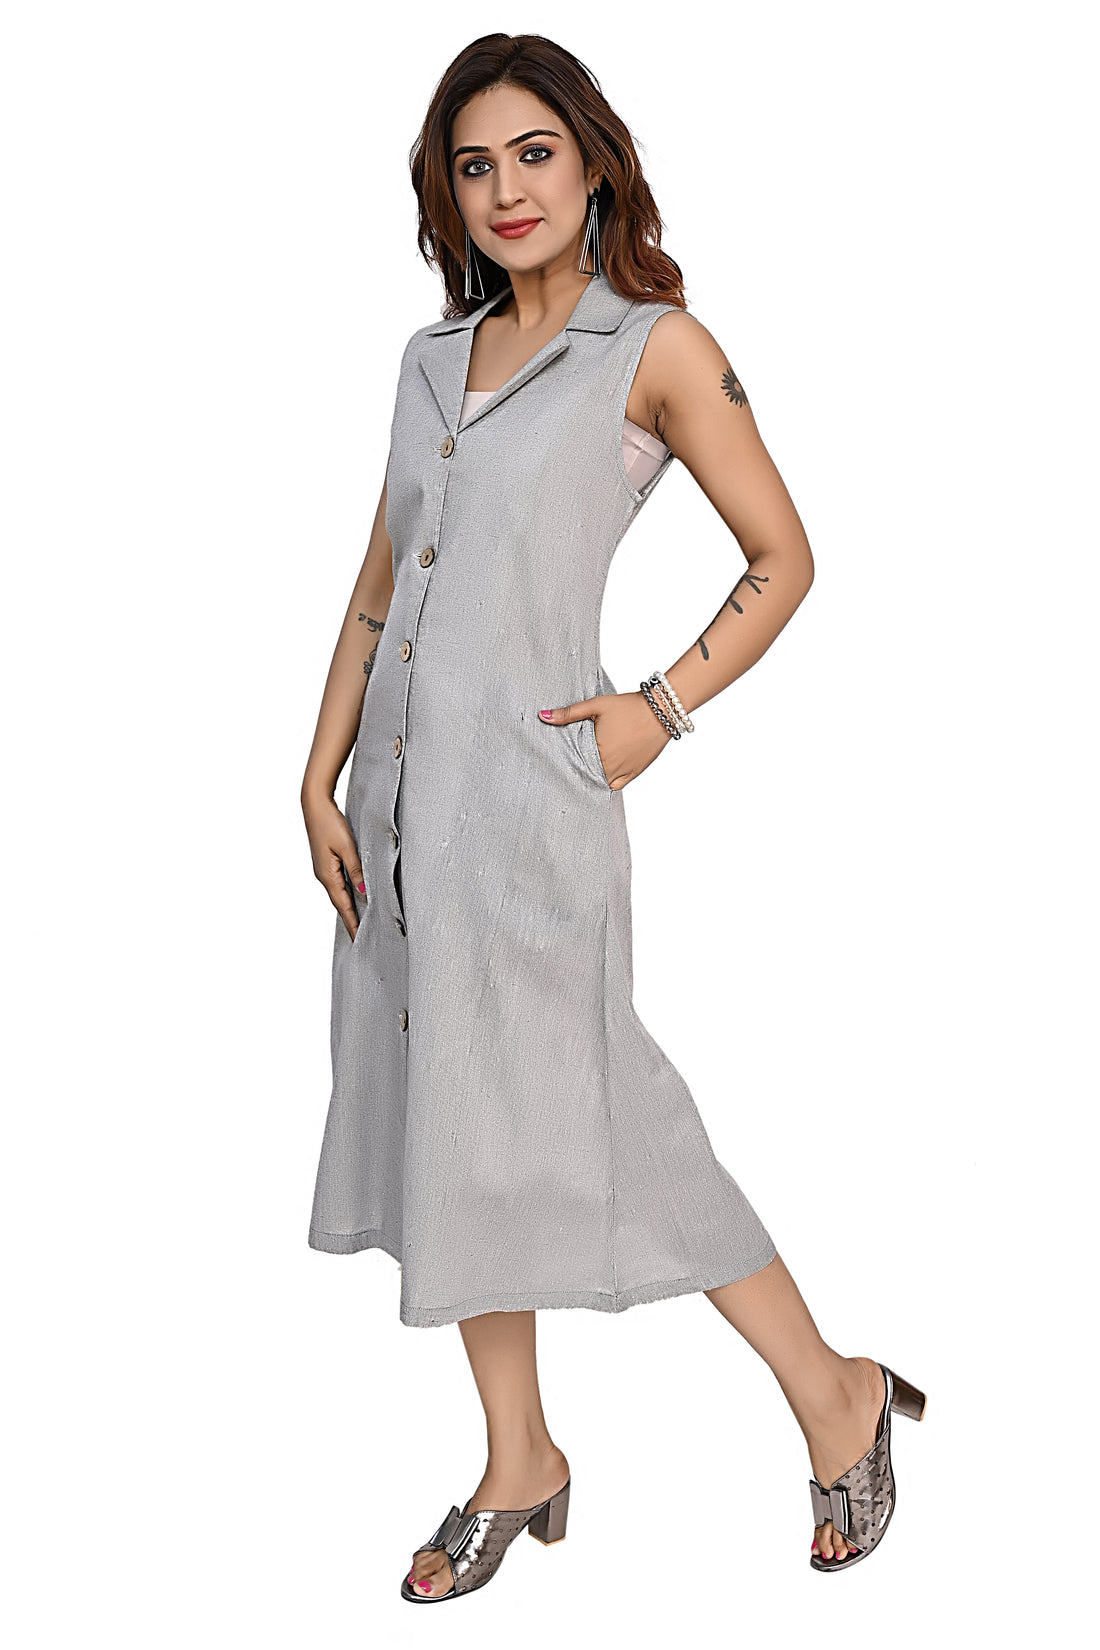 Nirmal Online Premium  Quality Cotton Tunic For Women In Grey Colour